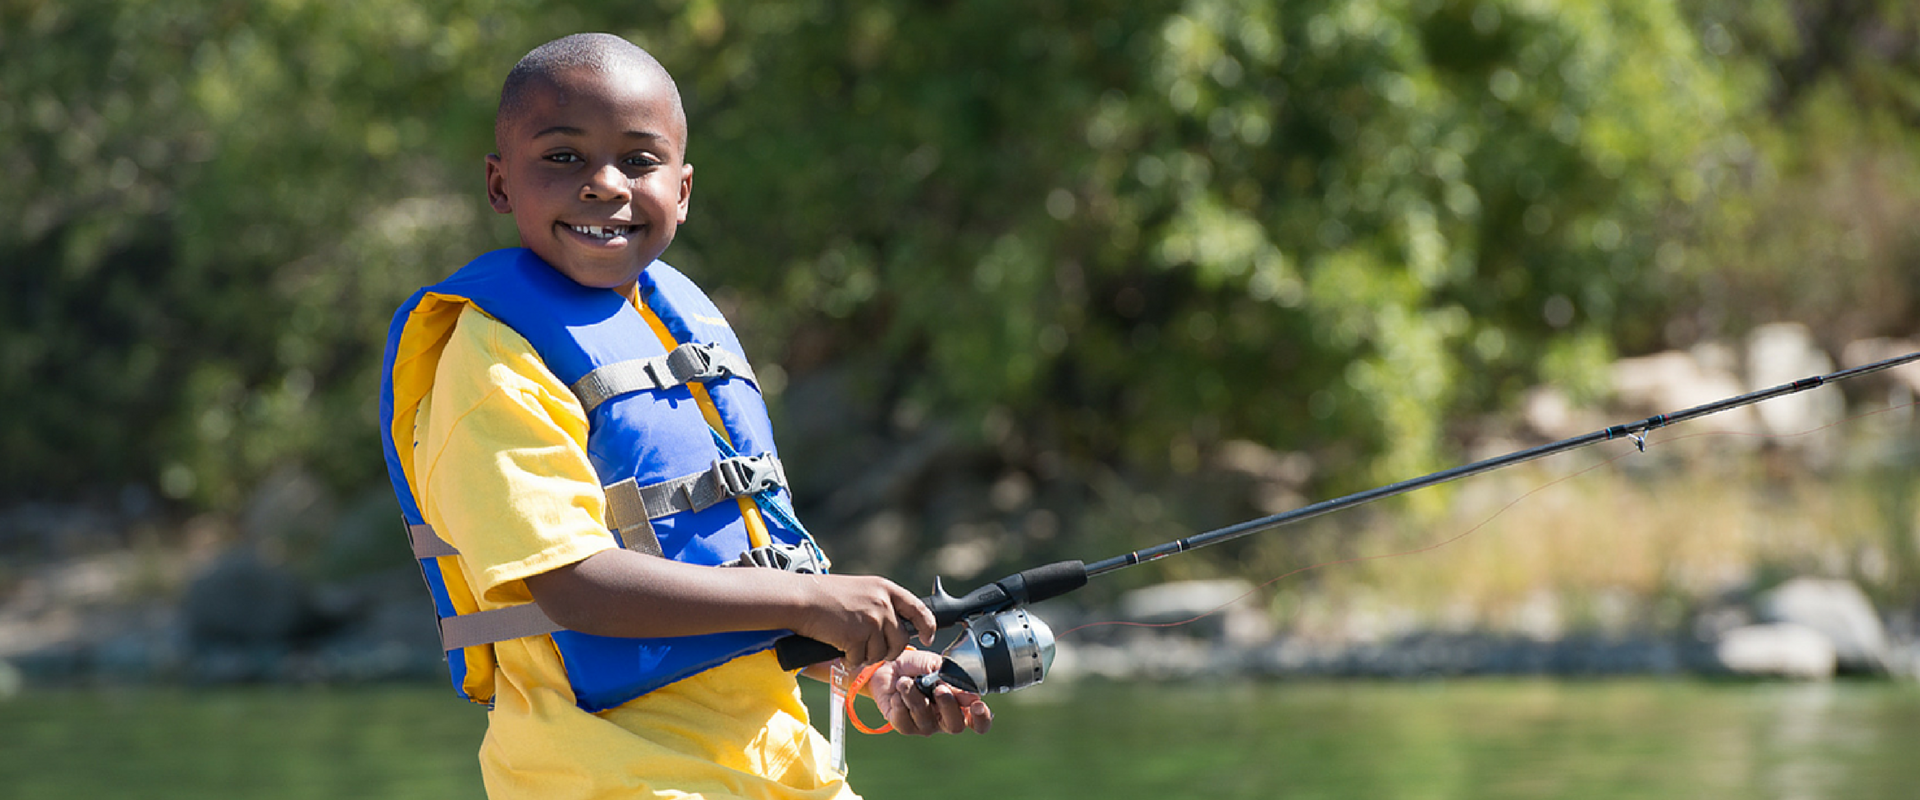 Urban Kids Fishing Derby | The Portland Observer